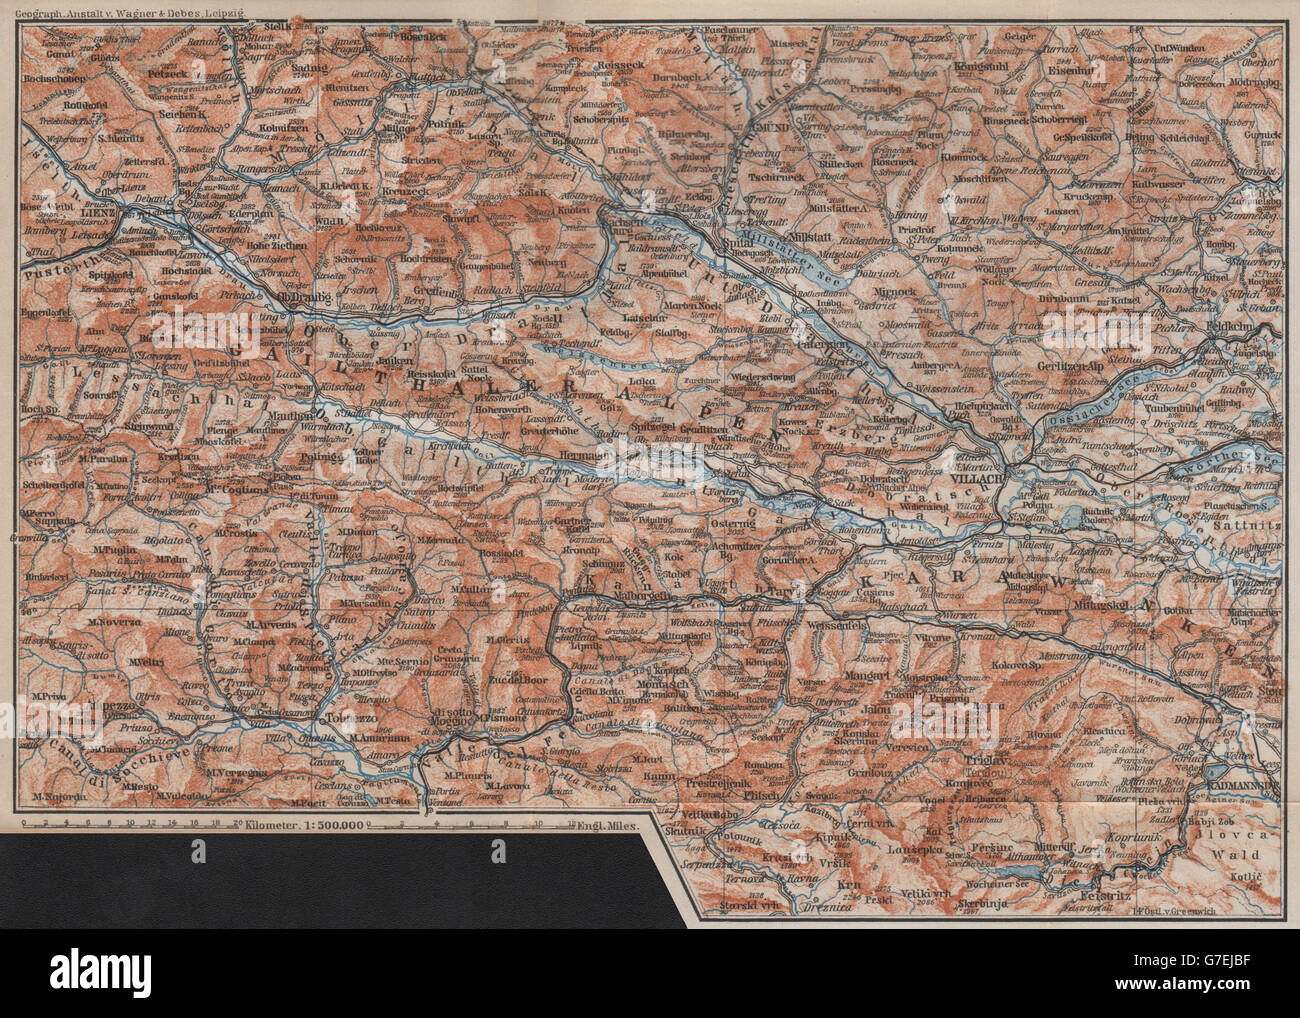 CARINTHIAN ALPS Lienz Villach Triglav Lake Bled Austria Italy Slovenia, 1905 map Stock Photo